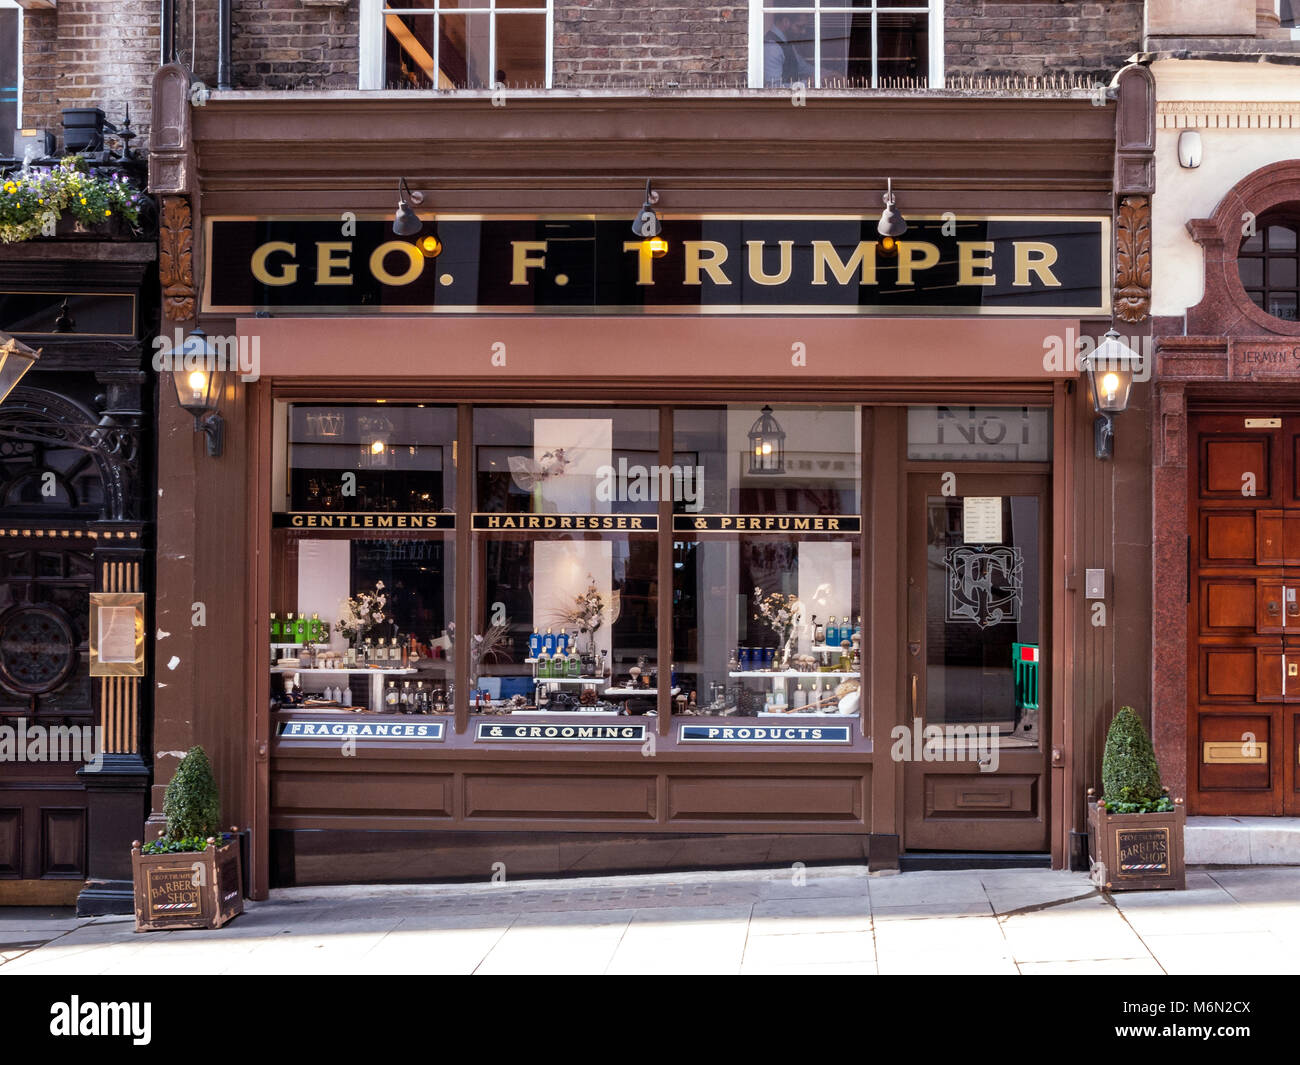 George F Trumper, Duke of York Street, London Stock Photo